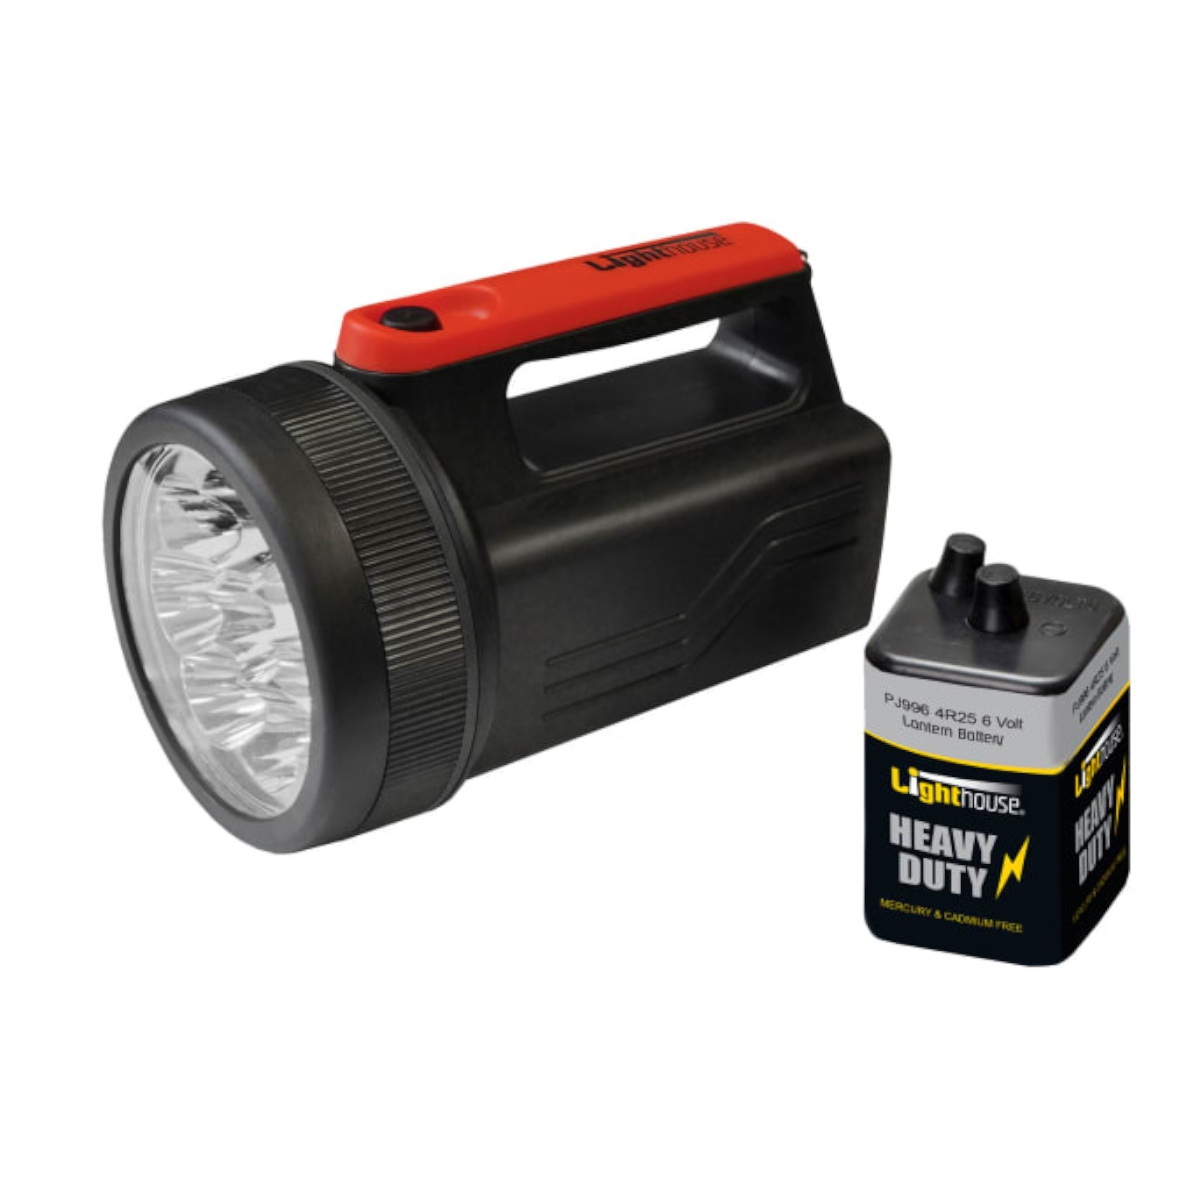 Battery light. Apature led Light Battery Compact. Coast Dual Battery Lantern. Фонарь v70. POWERCUT Light l71.